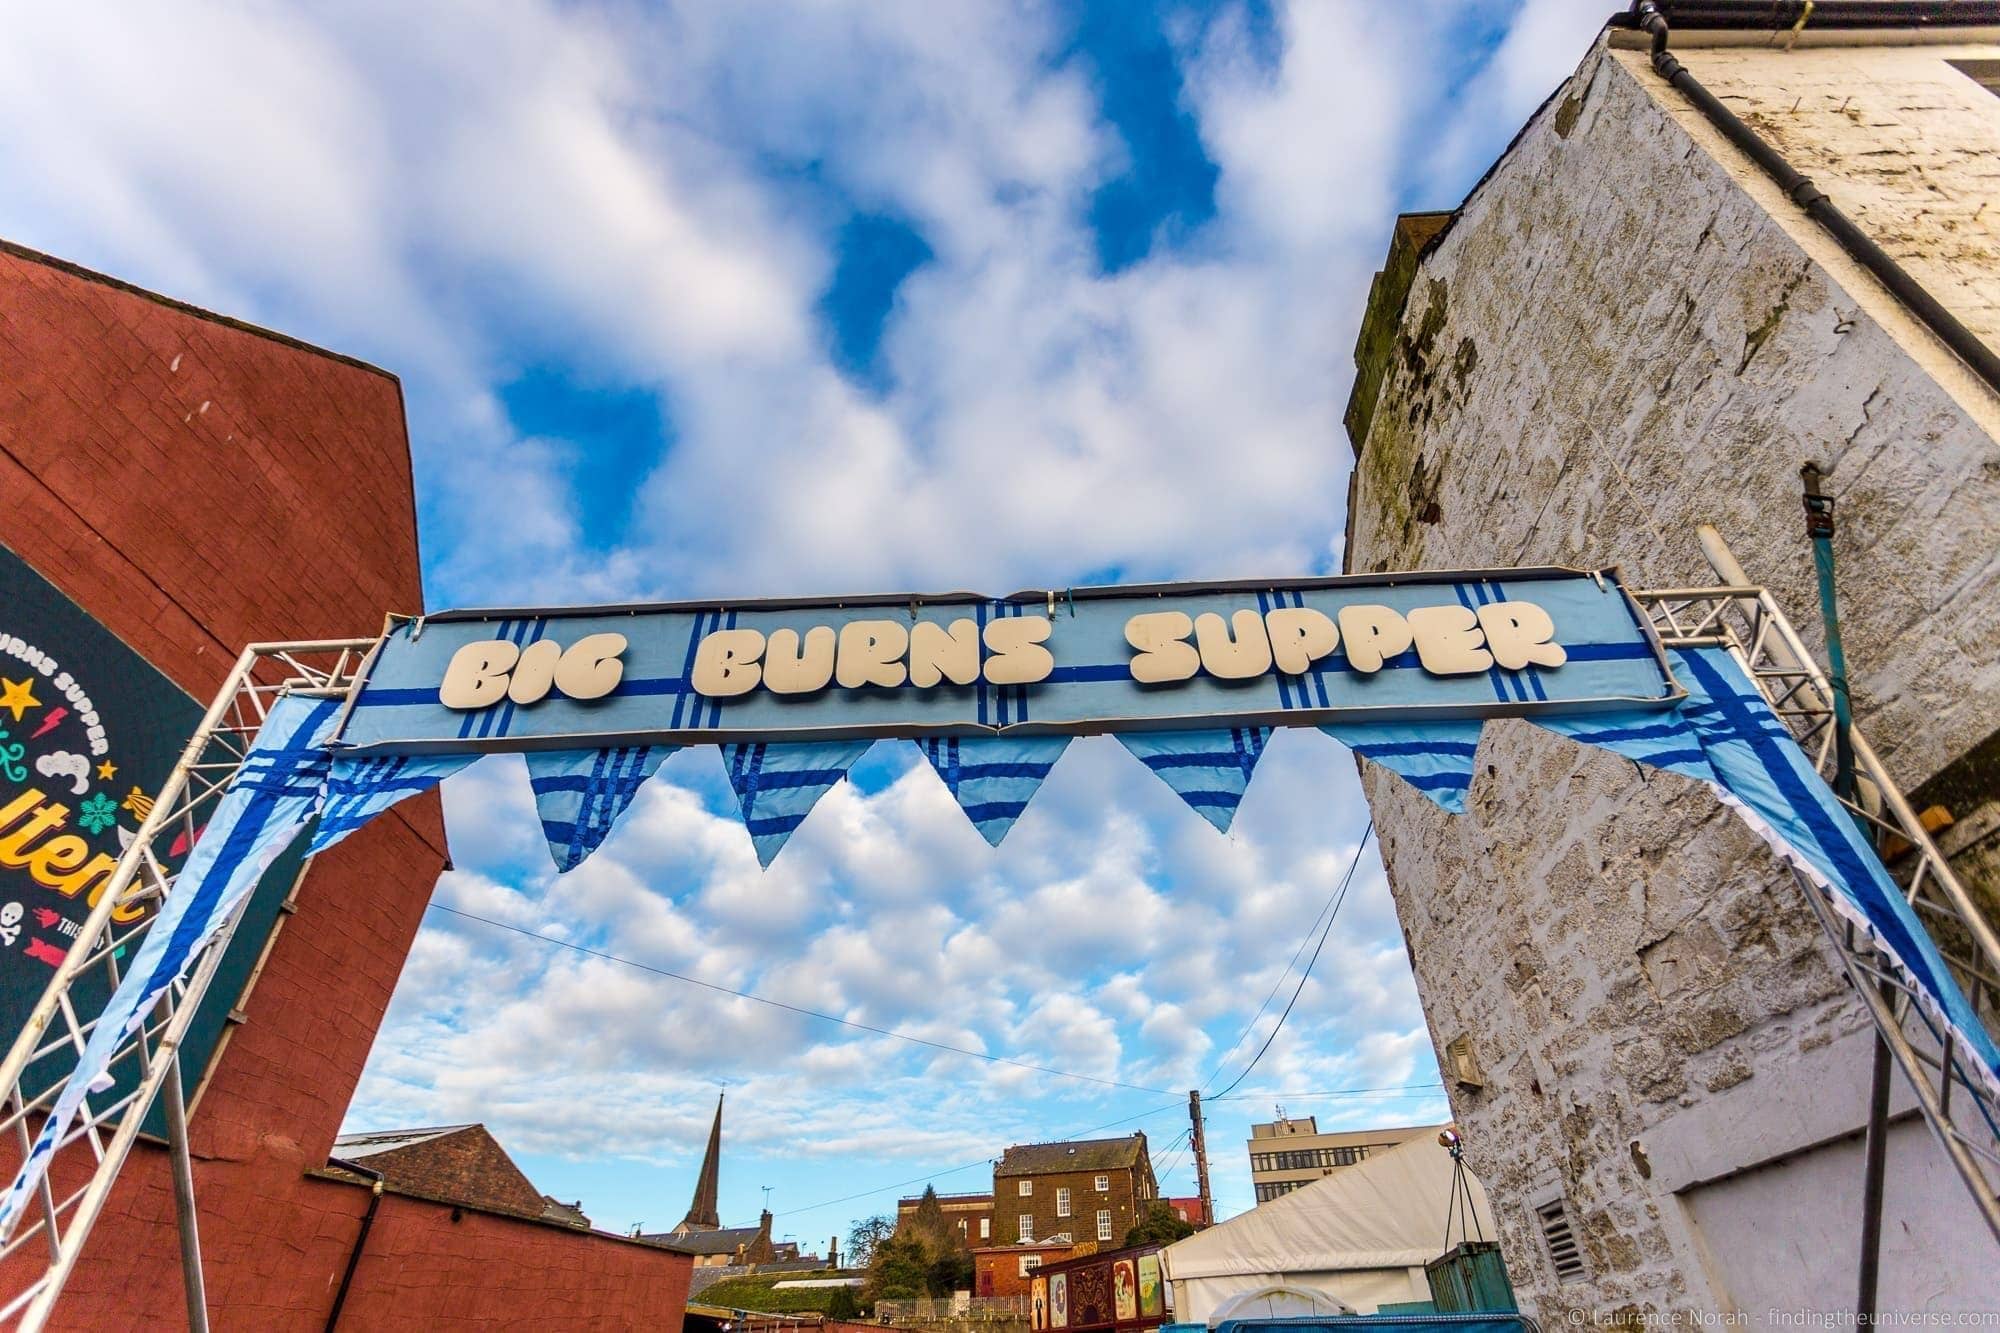 Big Burns Supper Dumfries